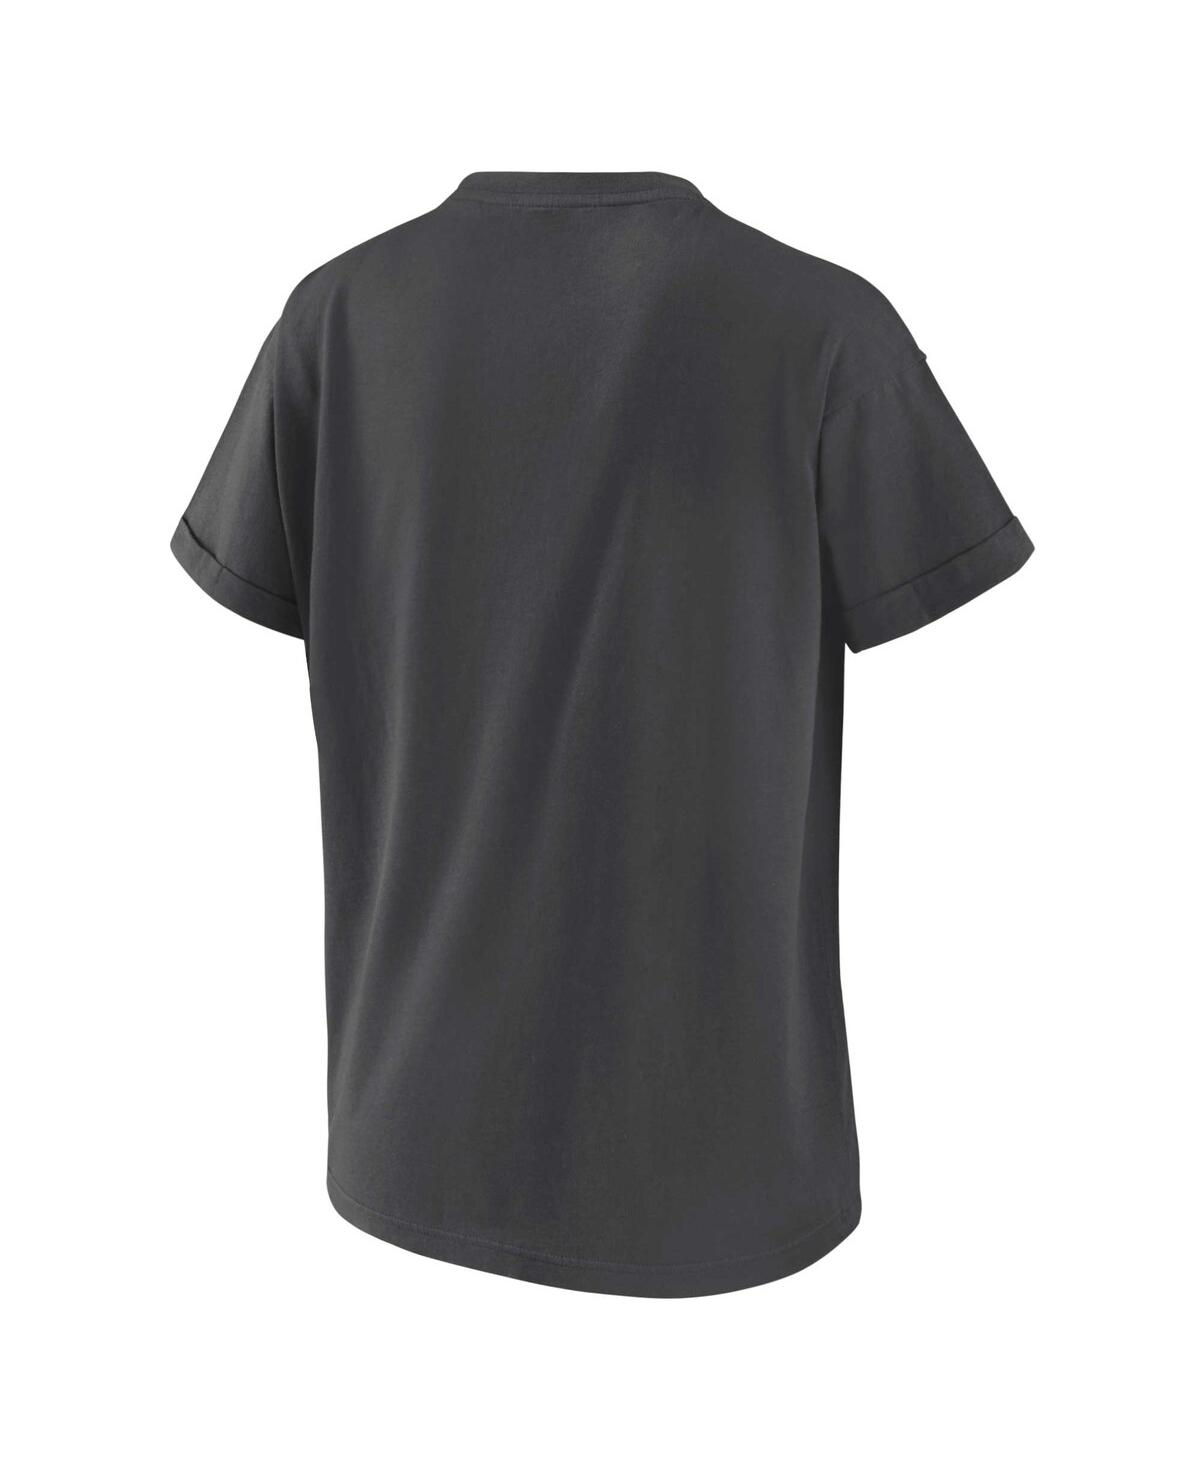 Shop Wear By Erin Andrews Women's  Charcoal Baltimore Ravens Boyfriend T-shirt